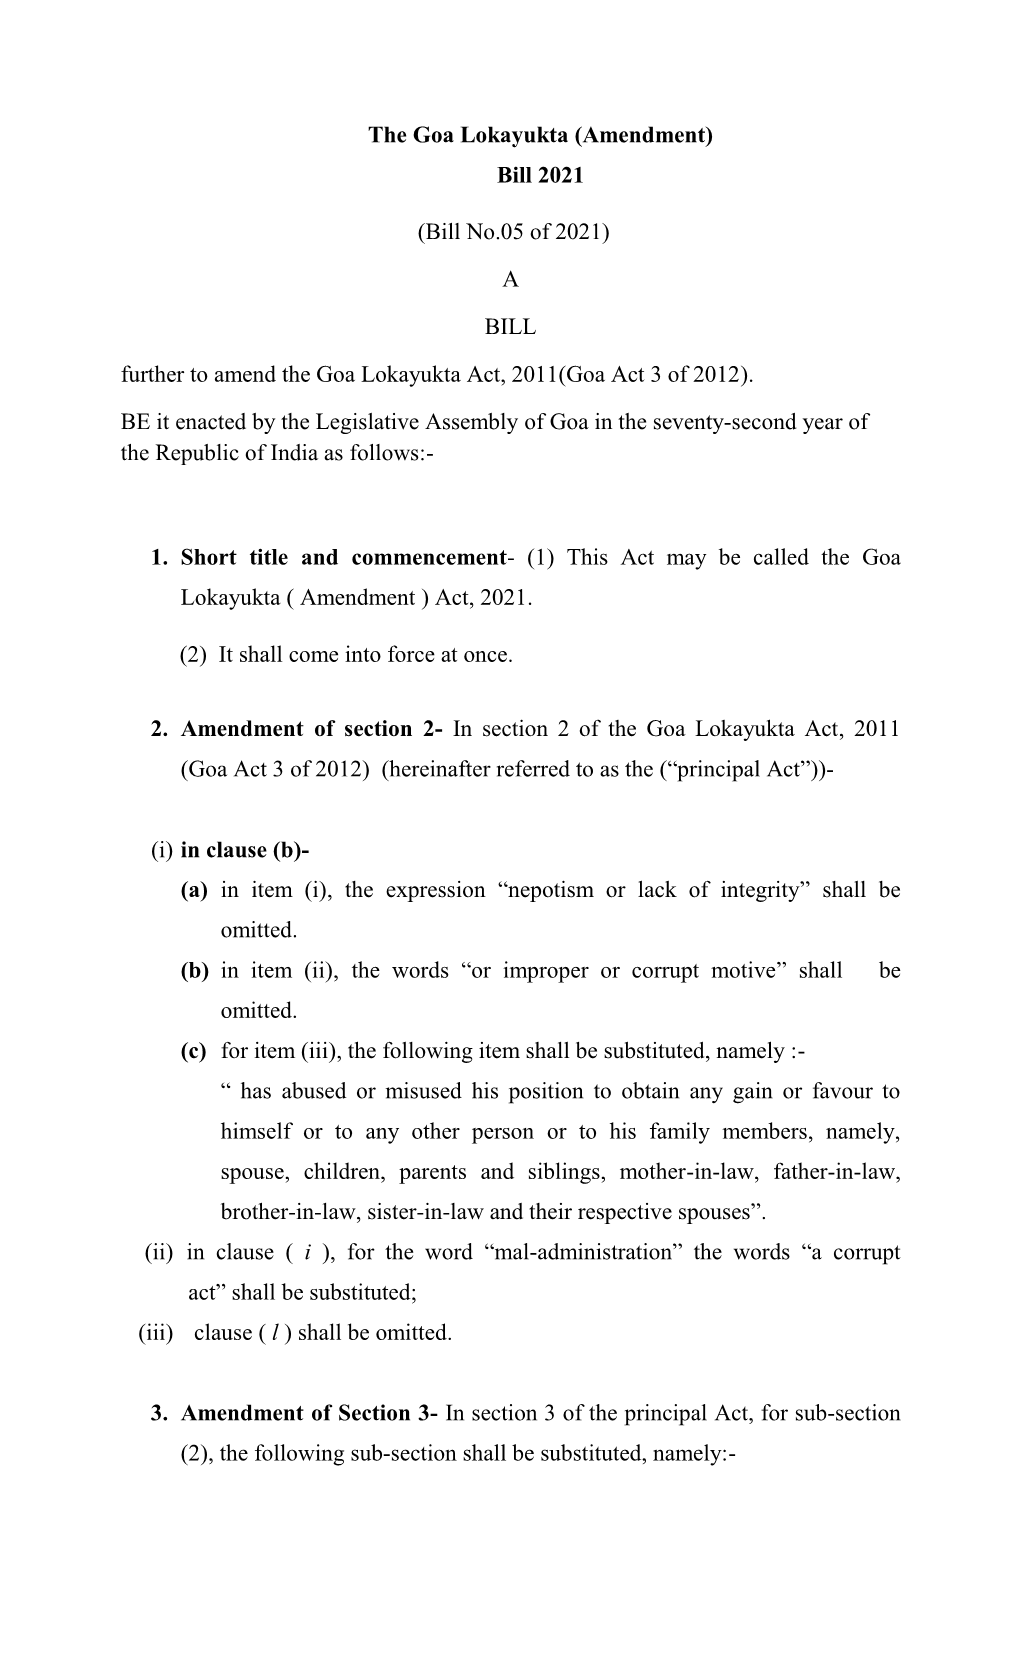 The Goa Lokayukta (Amendment) Bill 2021